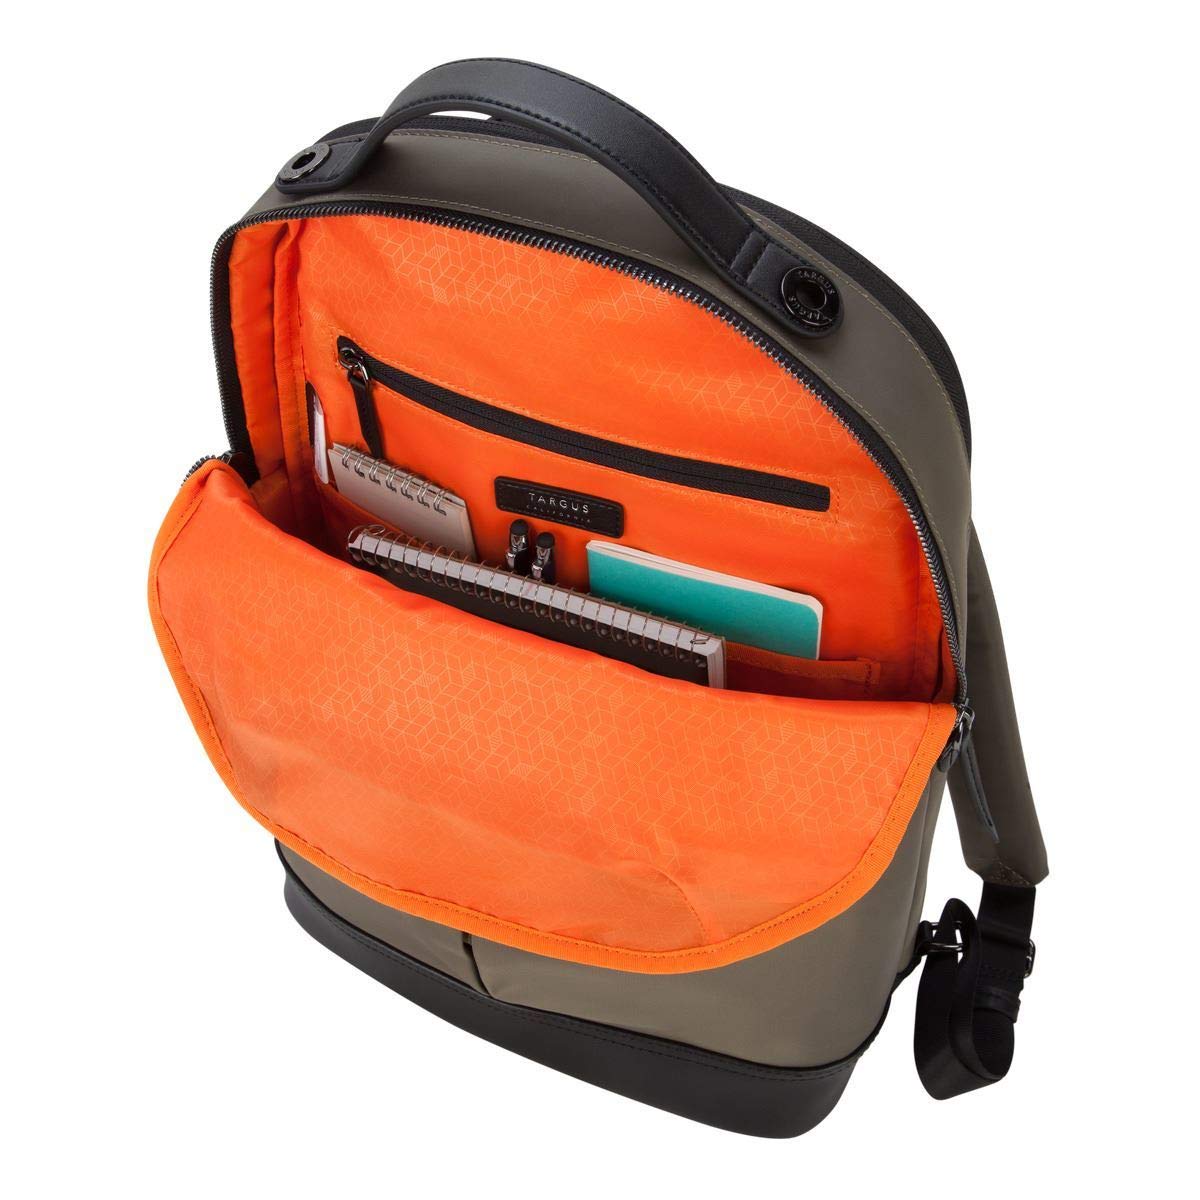 Targus Newport fit 15-Inch Laptop Backpack, Olive (TSB94502GL)